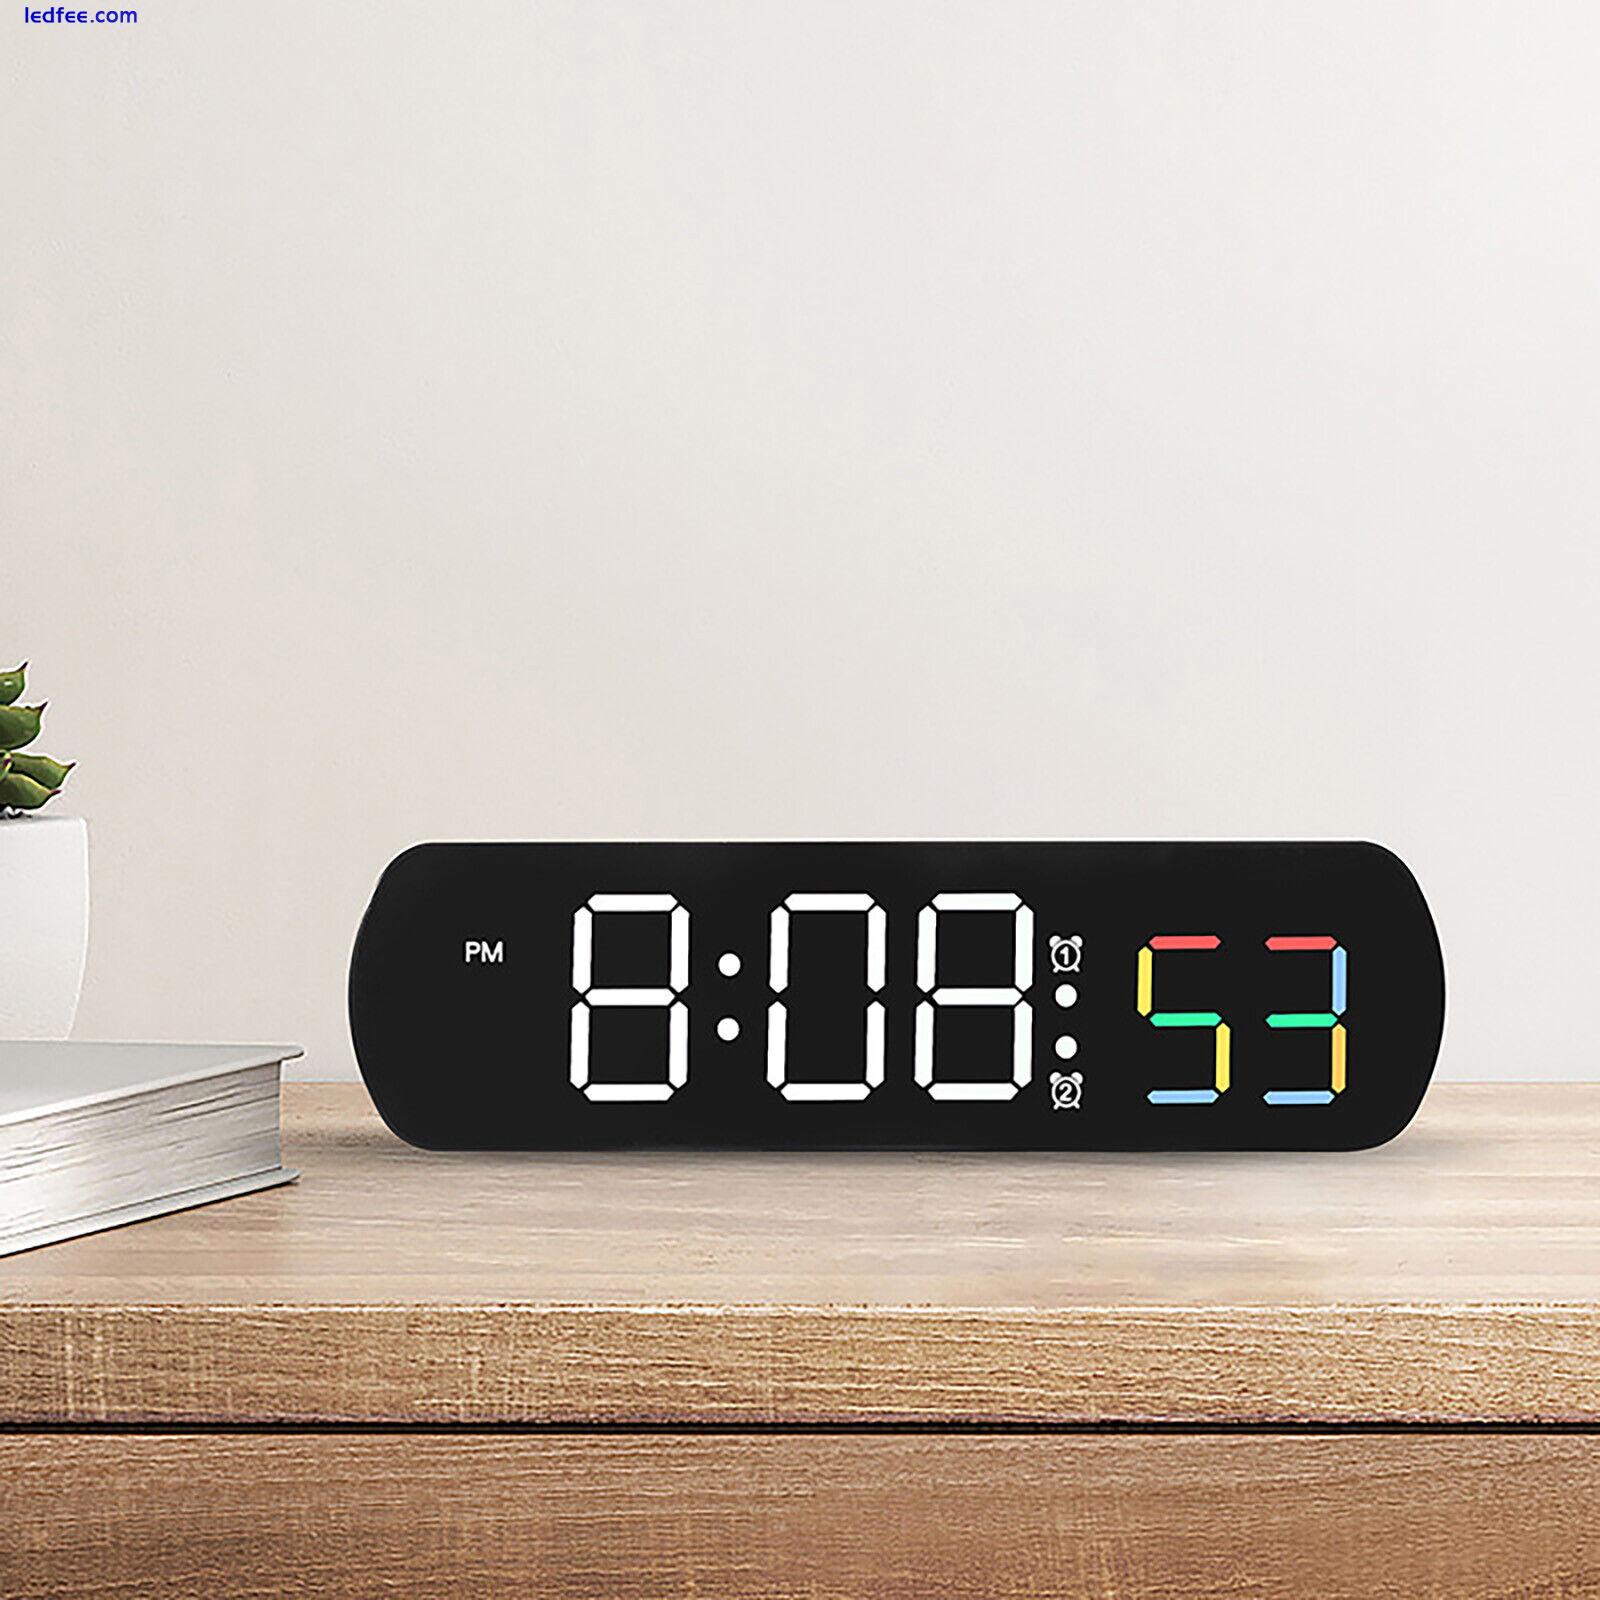 LED Electric Digital Alarm Clock with Temperature Date Display Bedside Clocks 4 